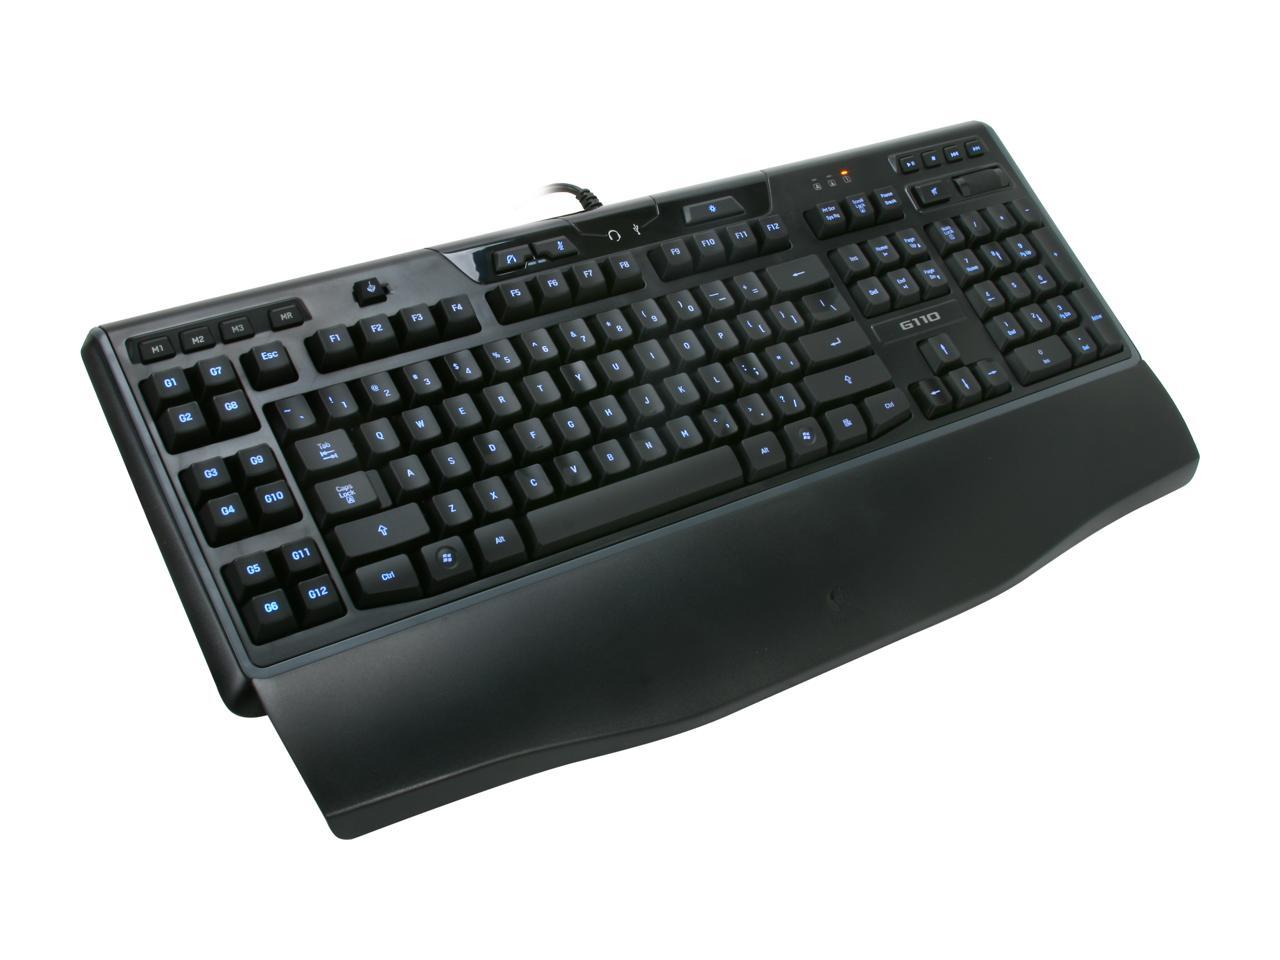 Logitech G110 Gaming Keyboard - Newegg.com